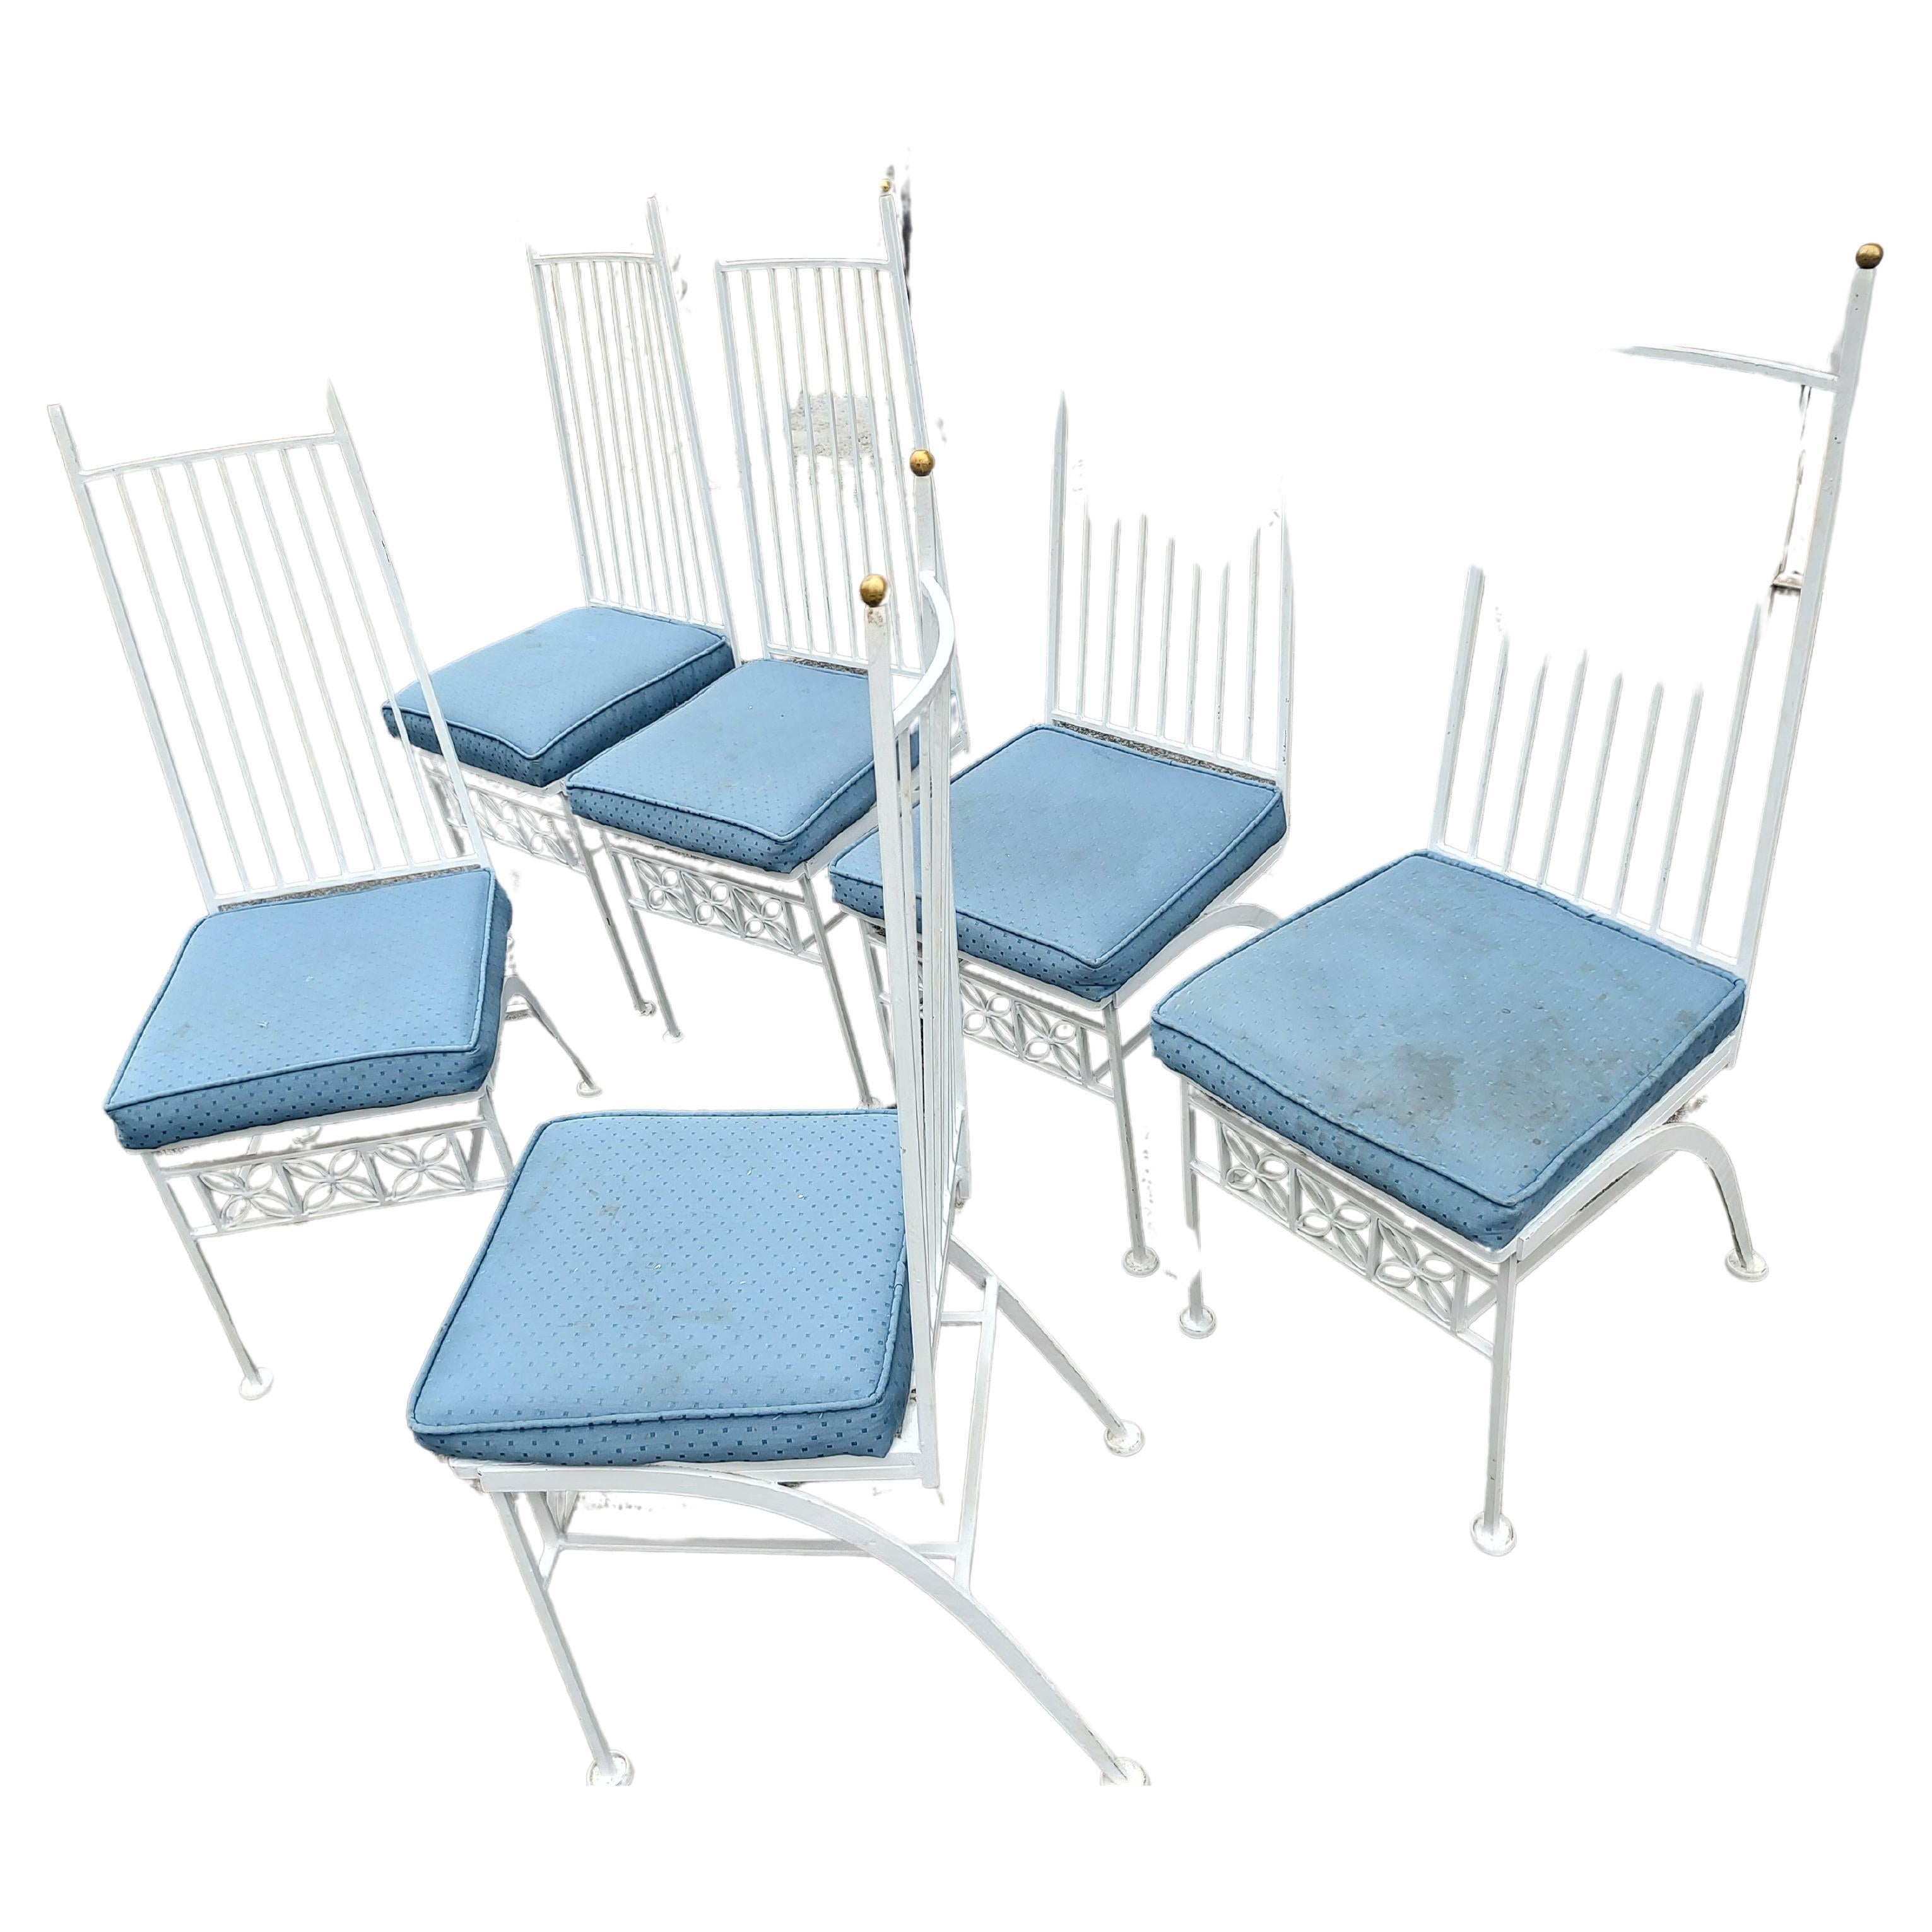 Set 6 Mid Century Modern El Prado Iron Indoor Outdoor Dining Chairs by Salterini